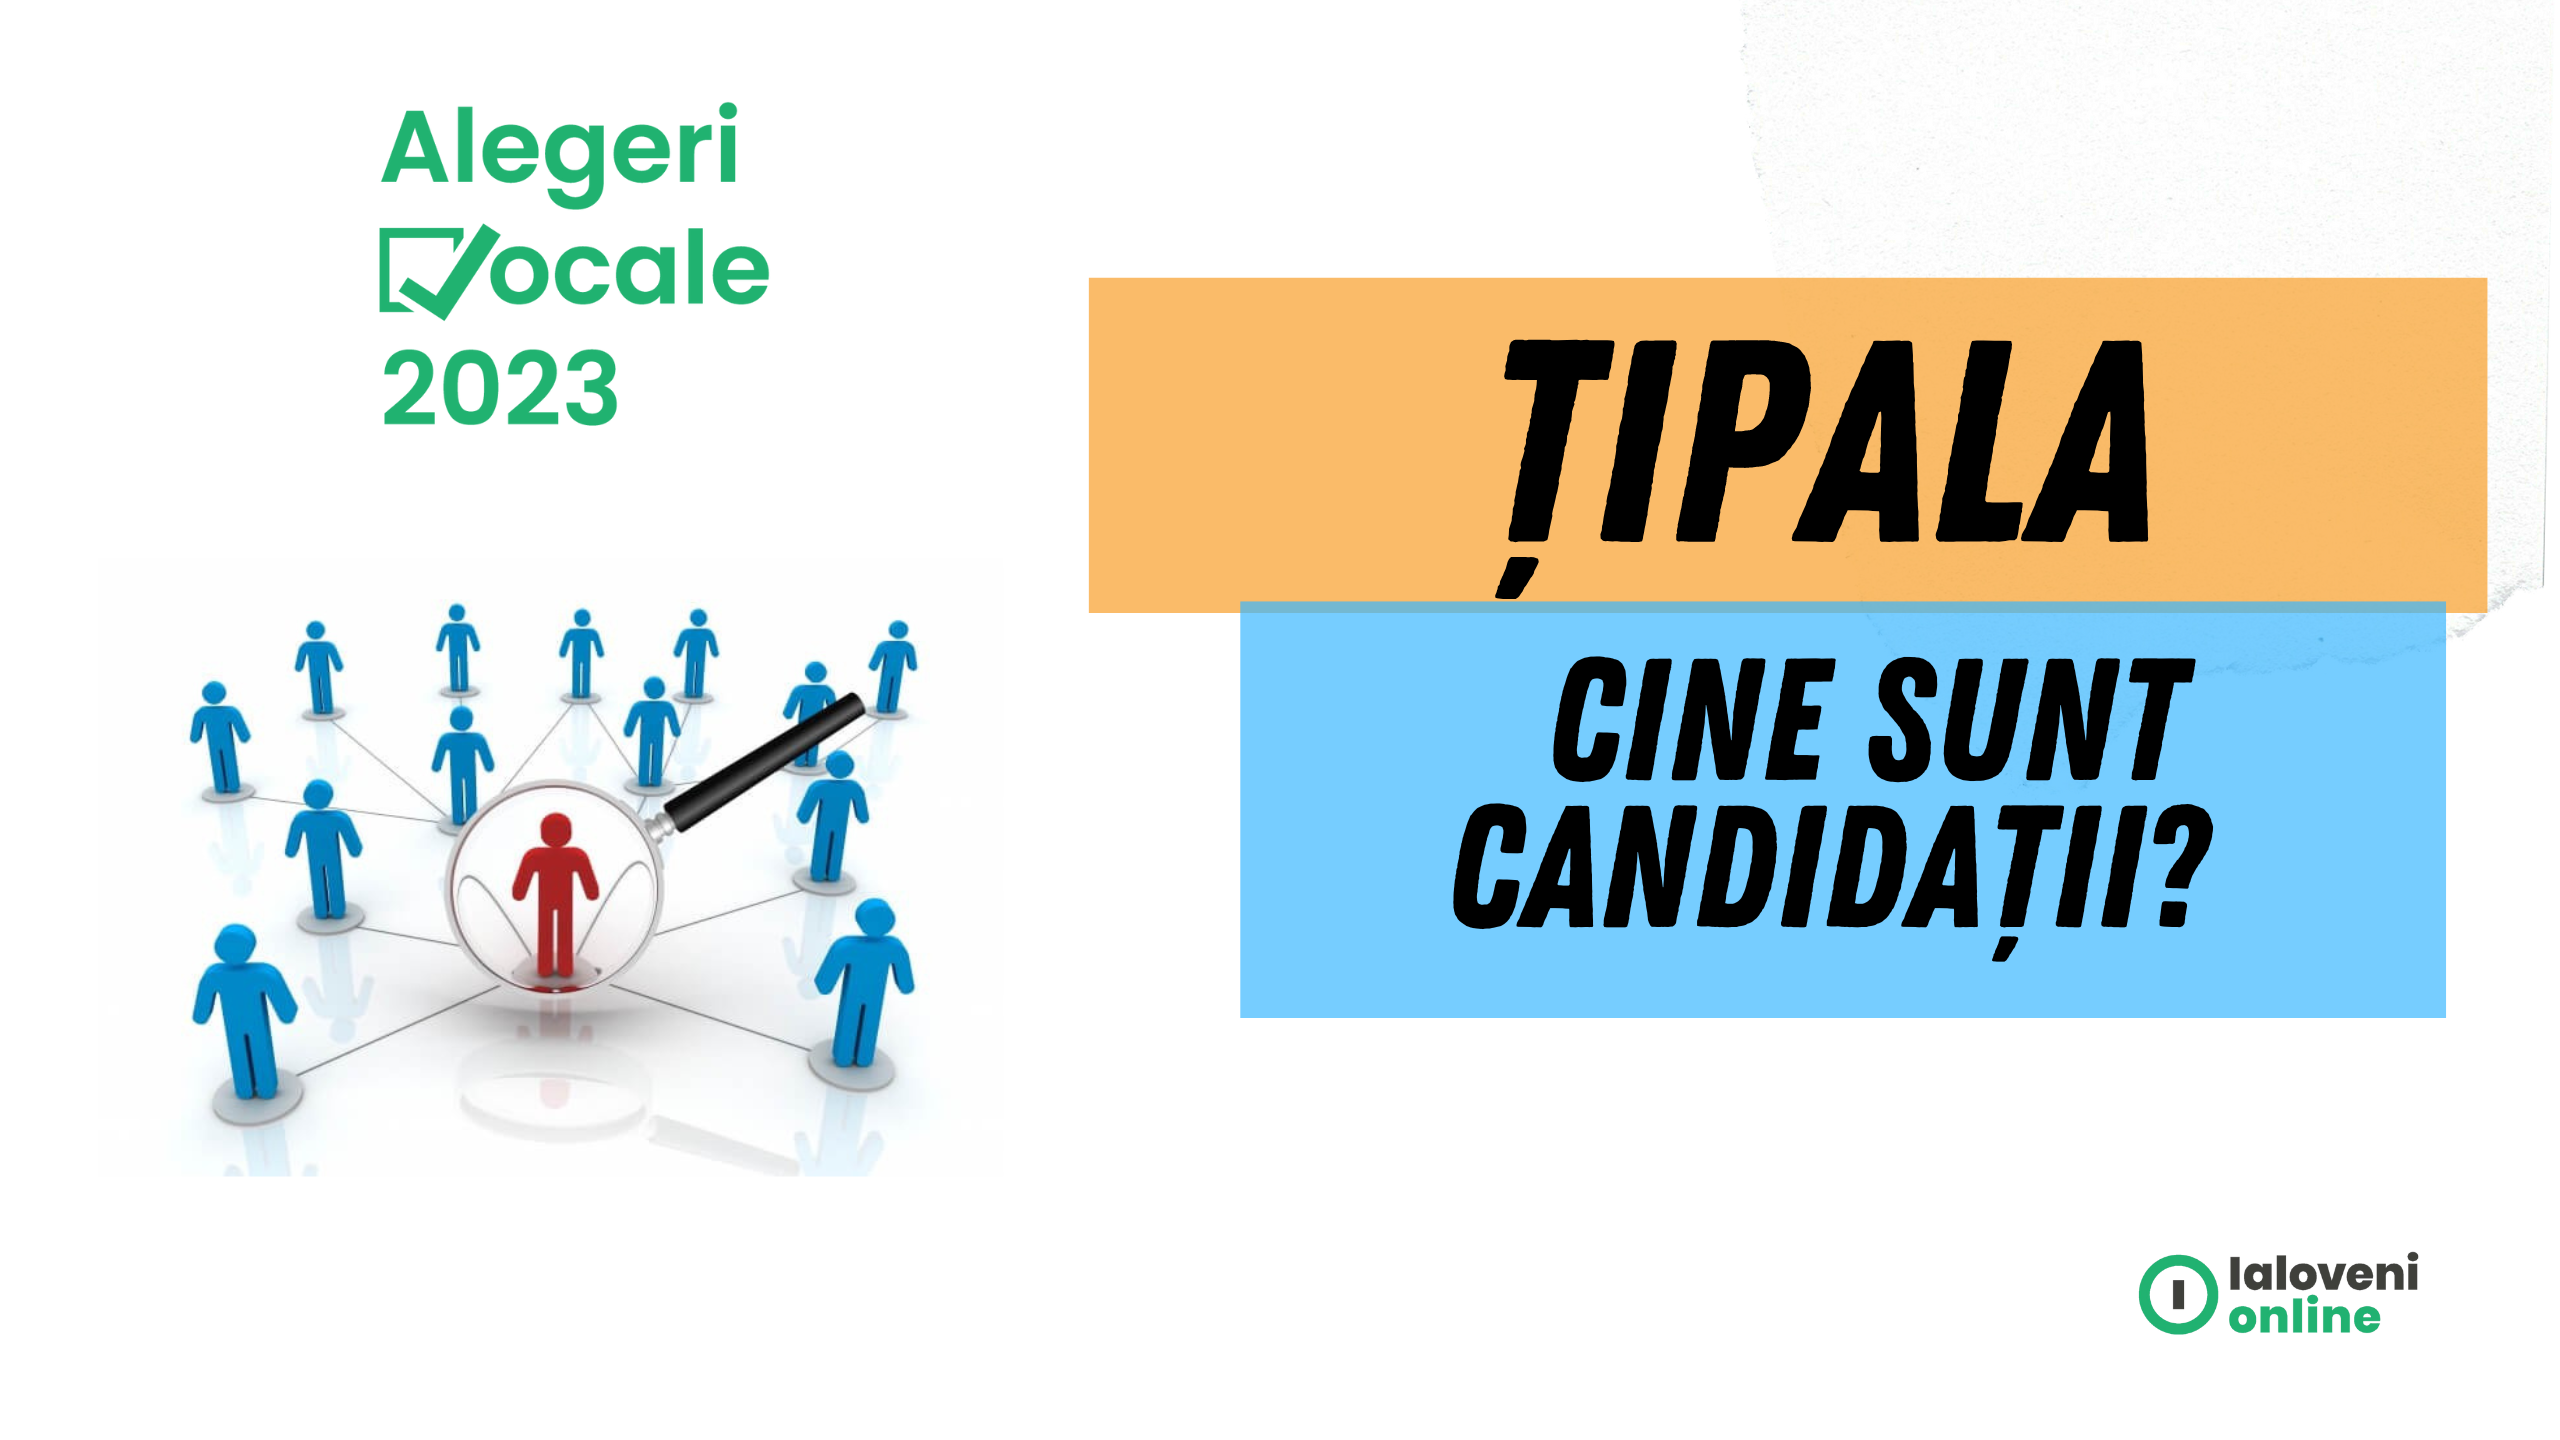 Alegeri locale 2023 Tipala